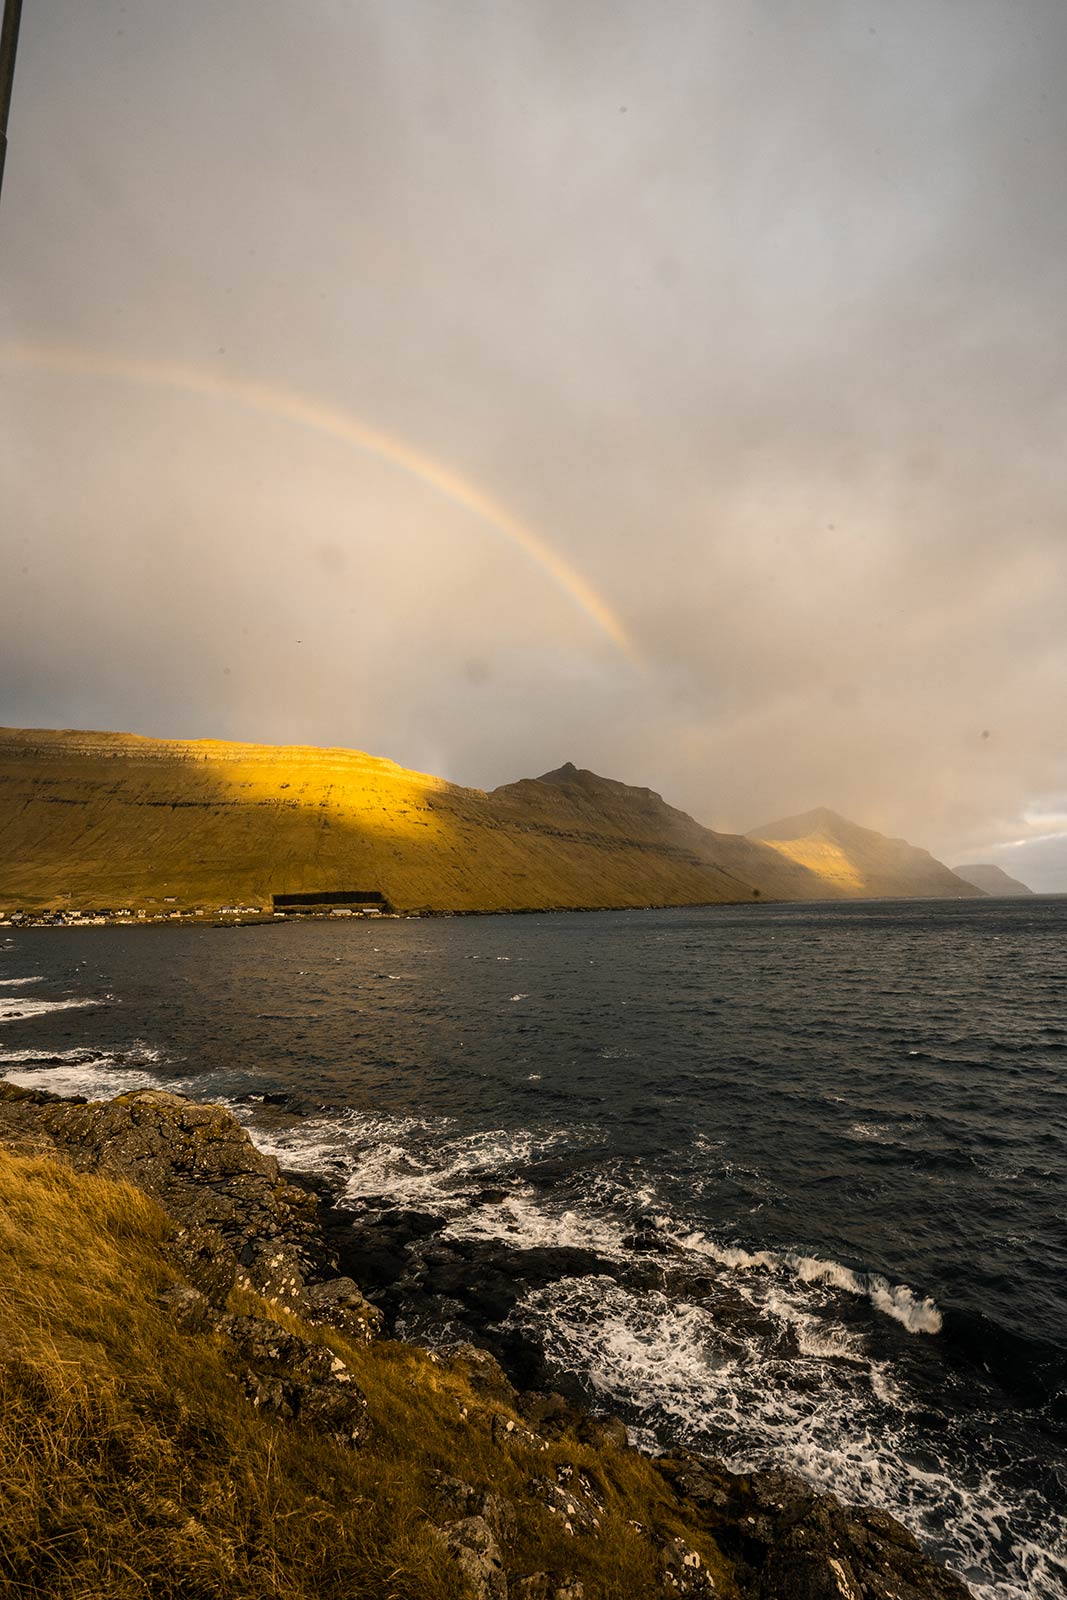 Rainbow at Villingdalsfjall in Faroe Islands. Getting blown off Mt Villingardalsfjall